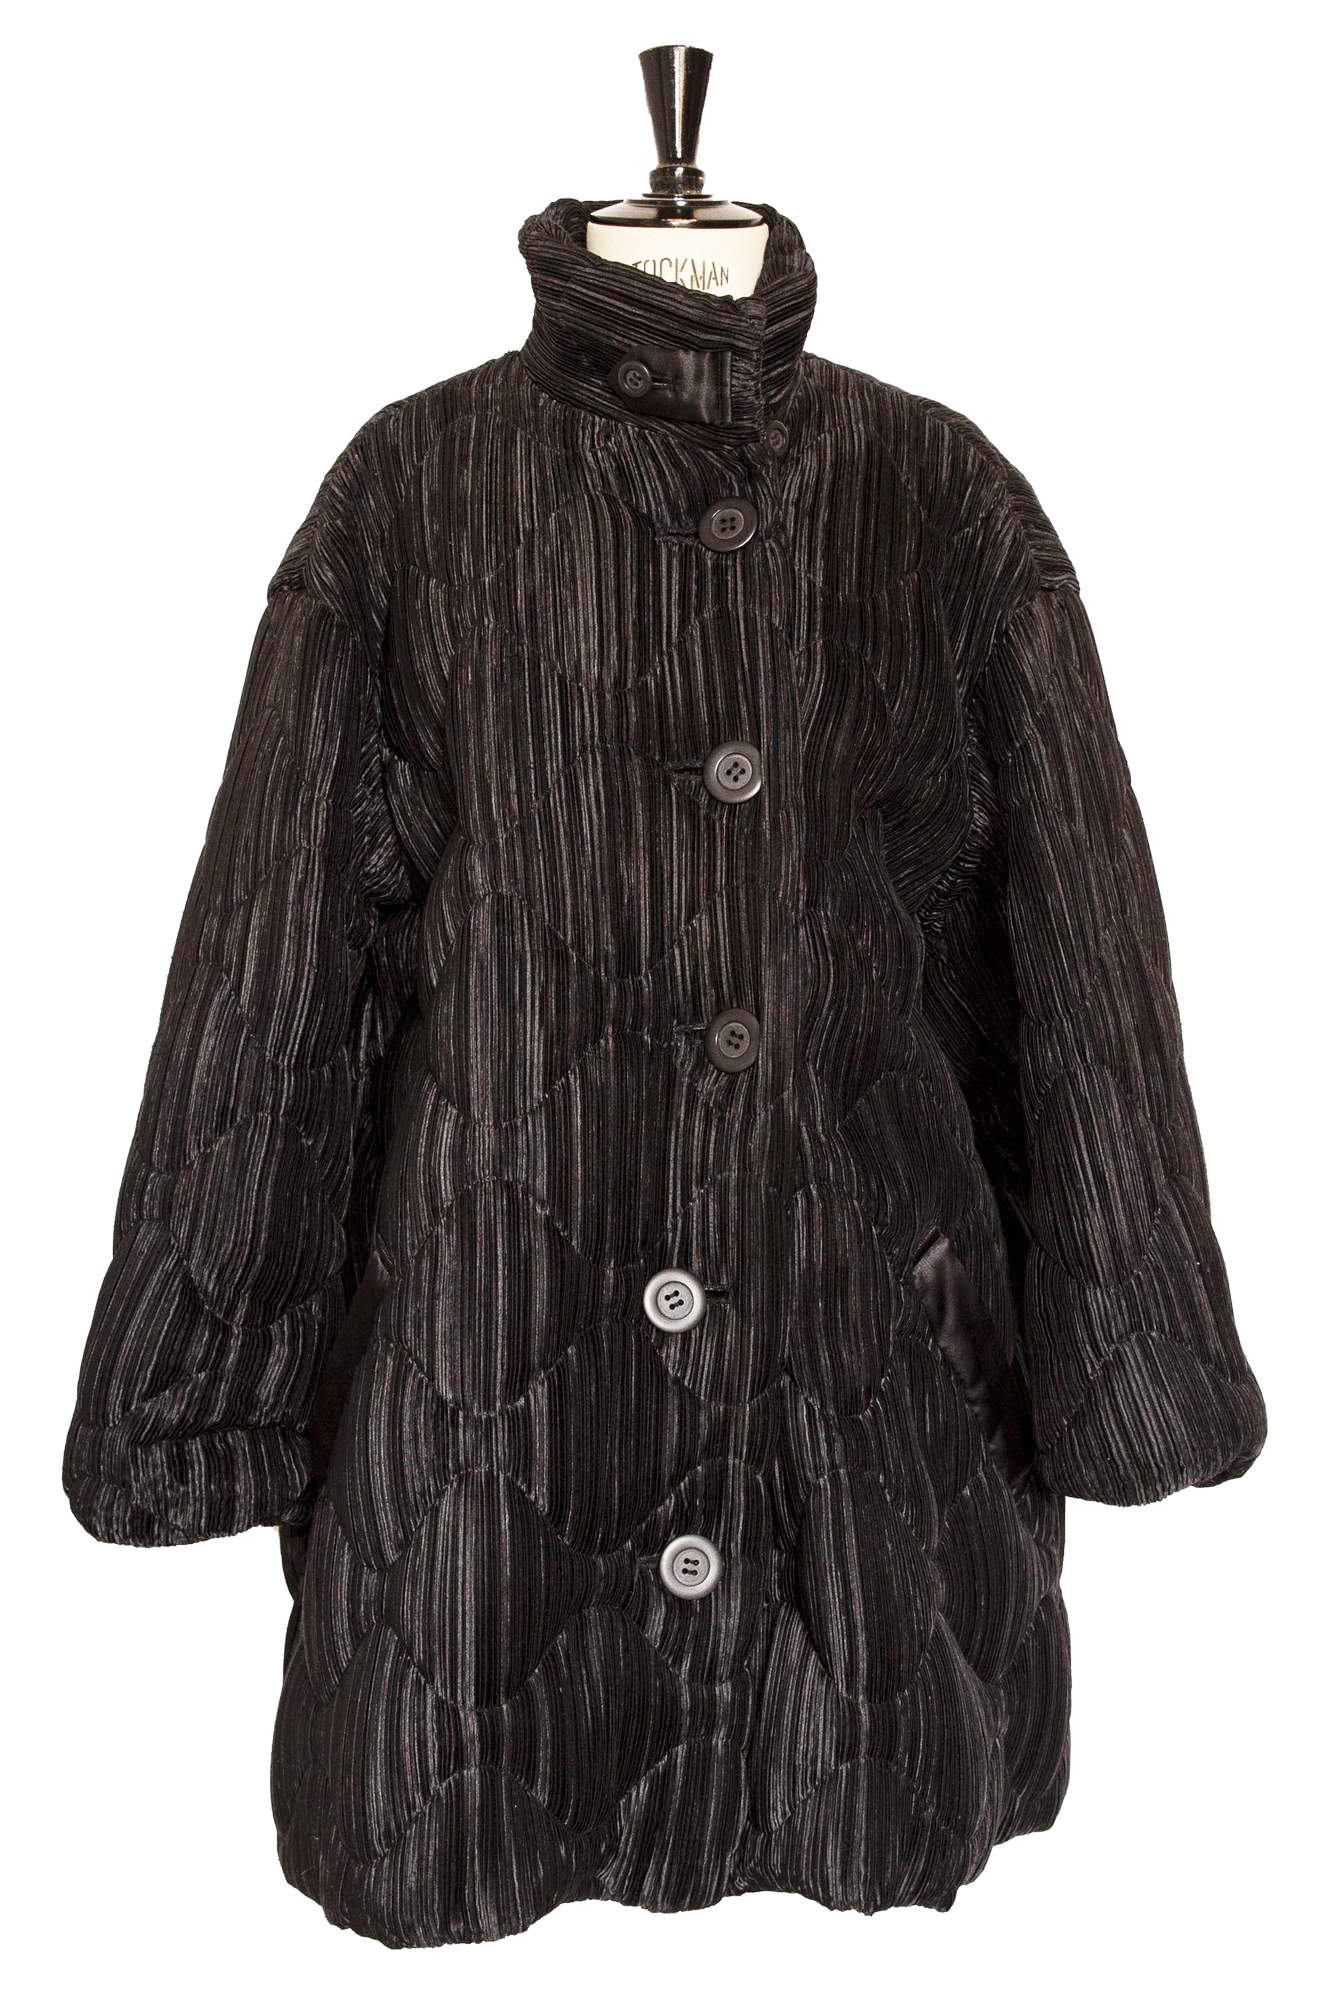 Issey Miyake DIAMOND PEA COAT Description: Pea coat made of pleated black...